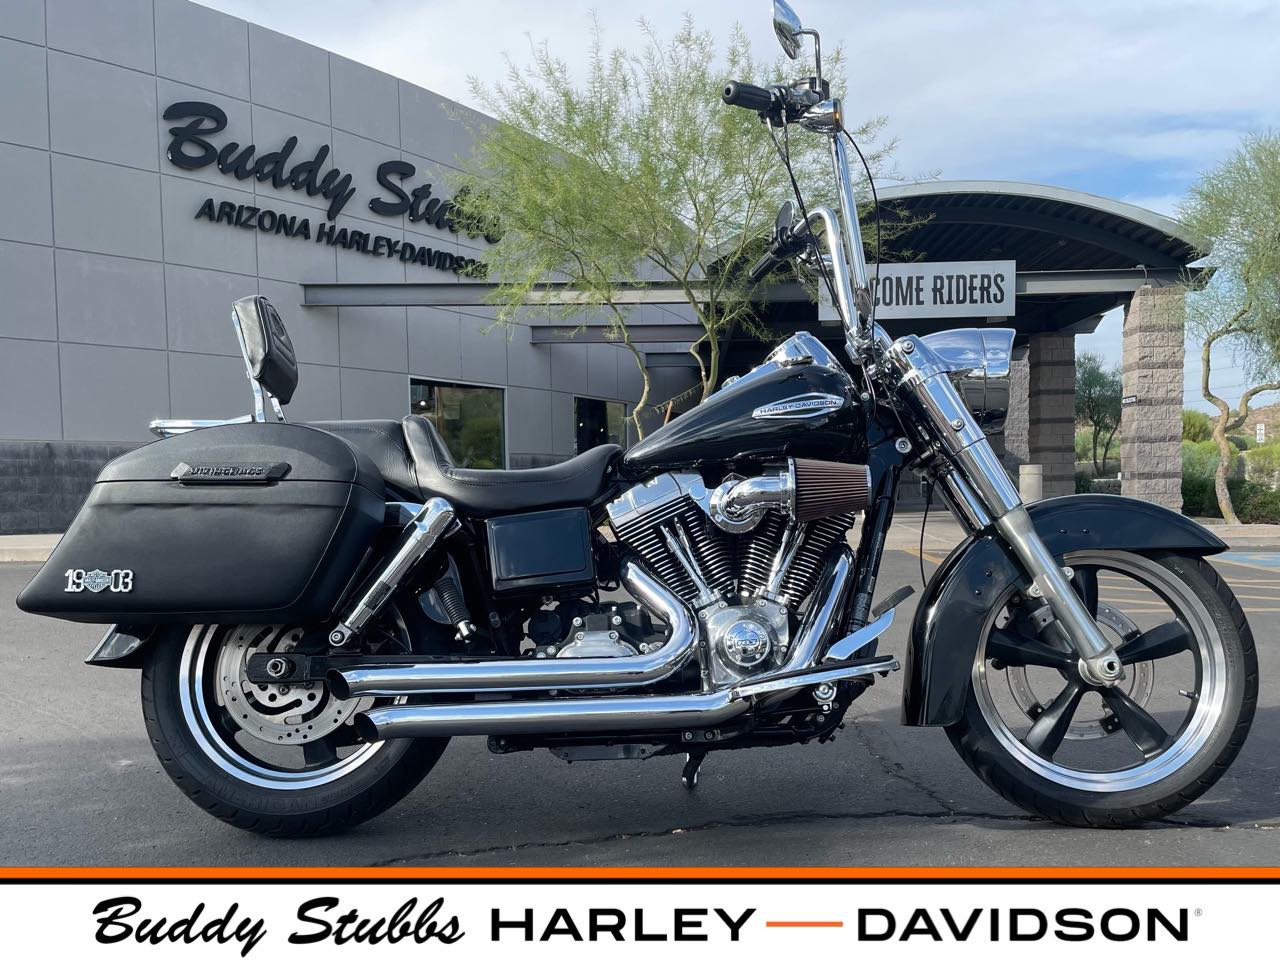 2012 Harley-Davidson Dyna Glide Switchback at Buddy Stubbs Arizona Harley-Davidson